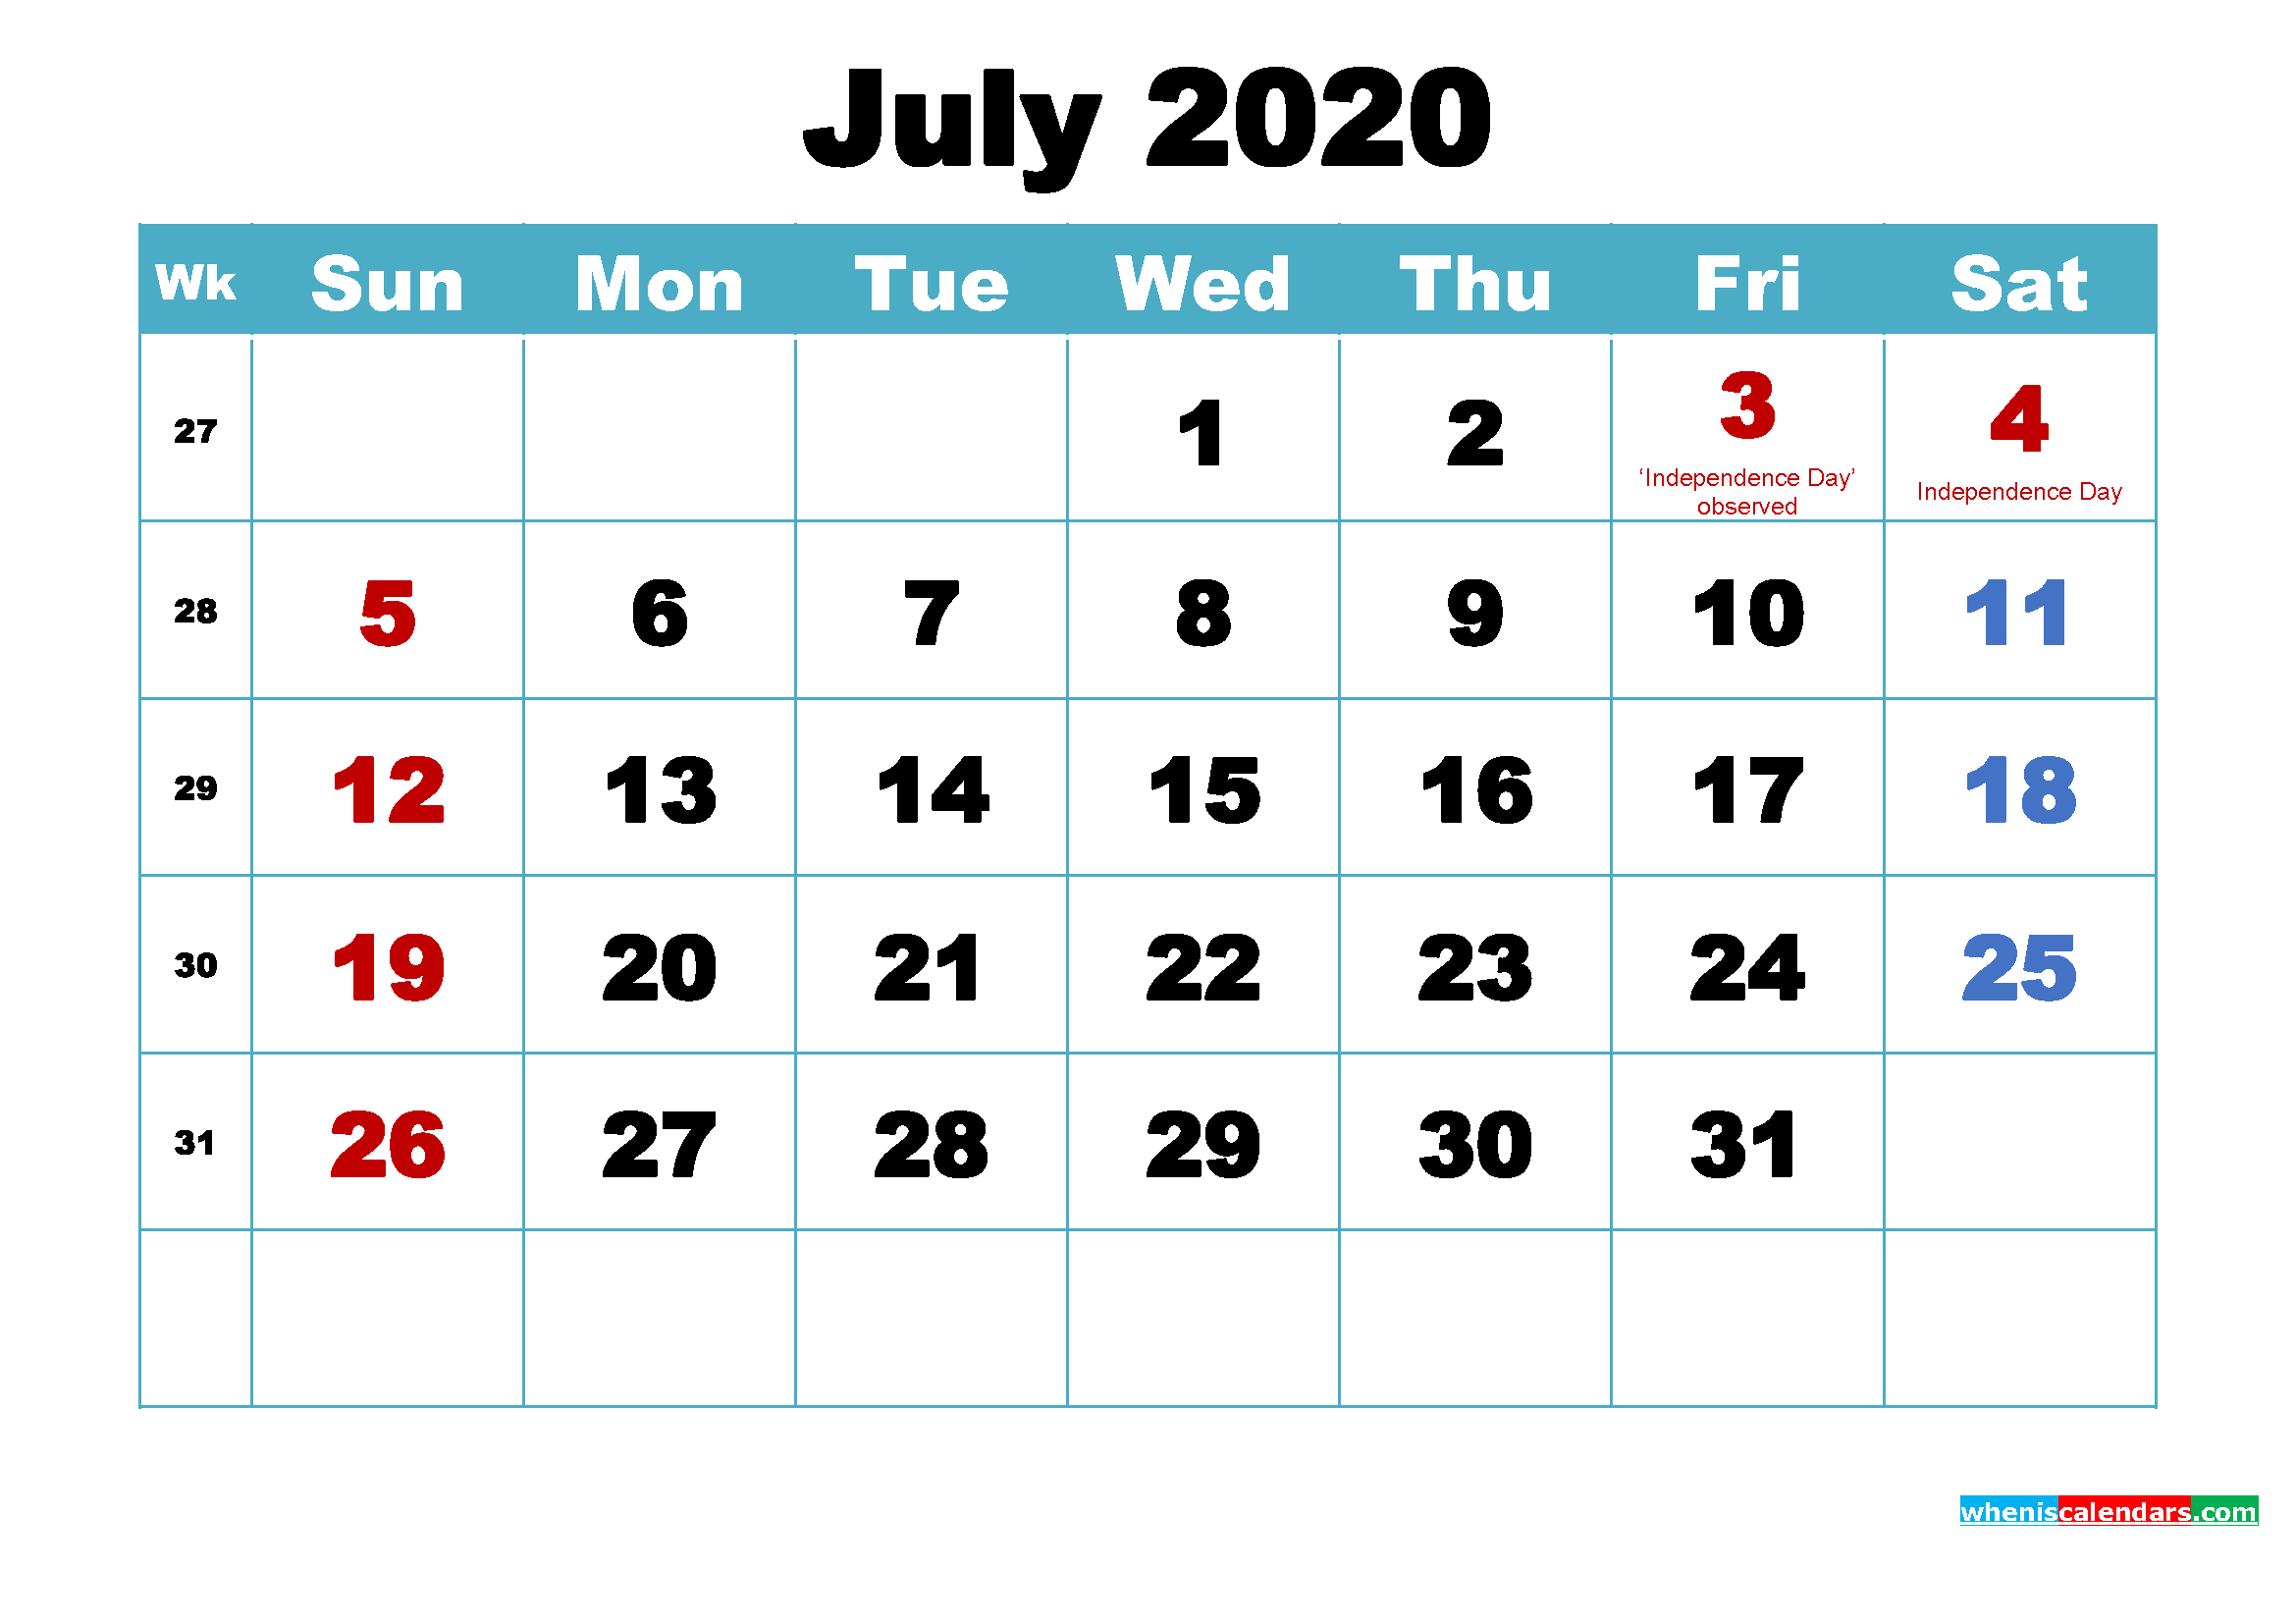 July 2021 Calendar Wallpapers - Wallpaper Cave